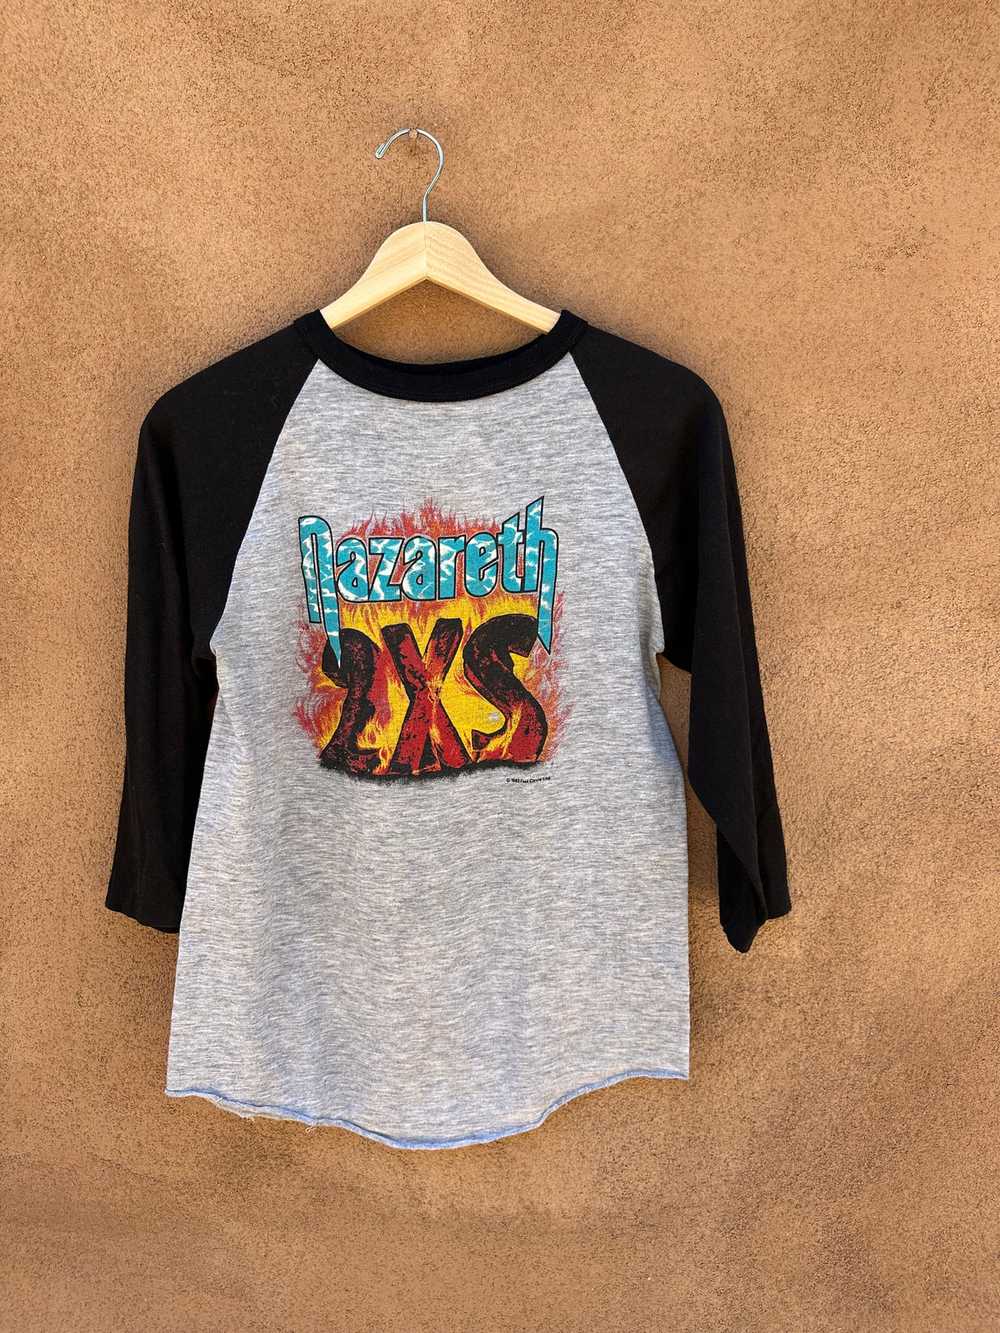 1982 Nazareth T-Shirt - image 1